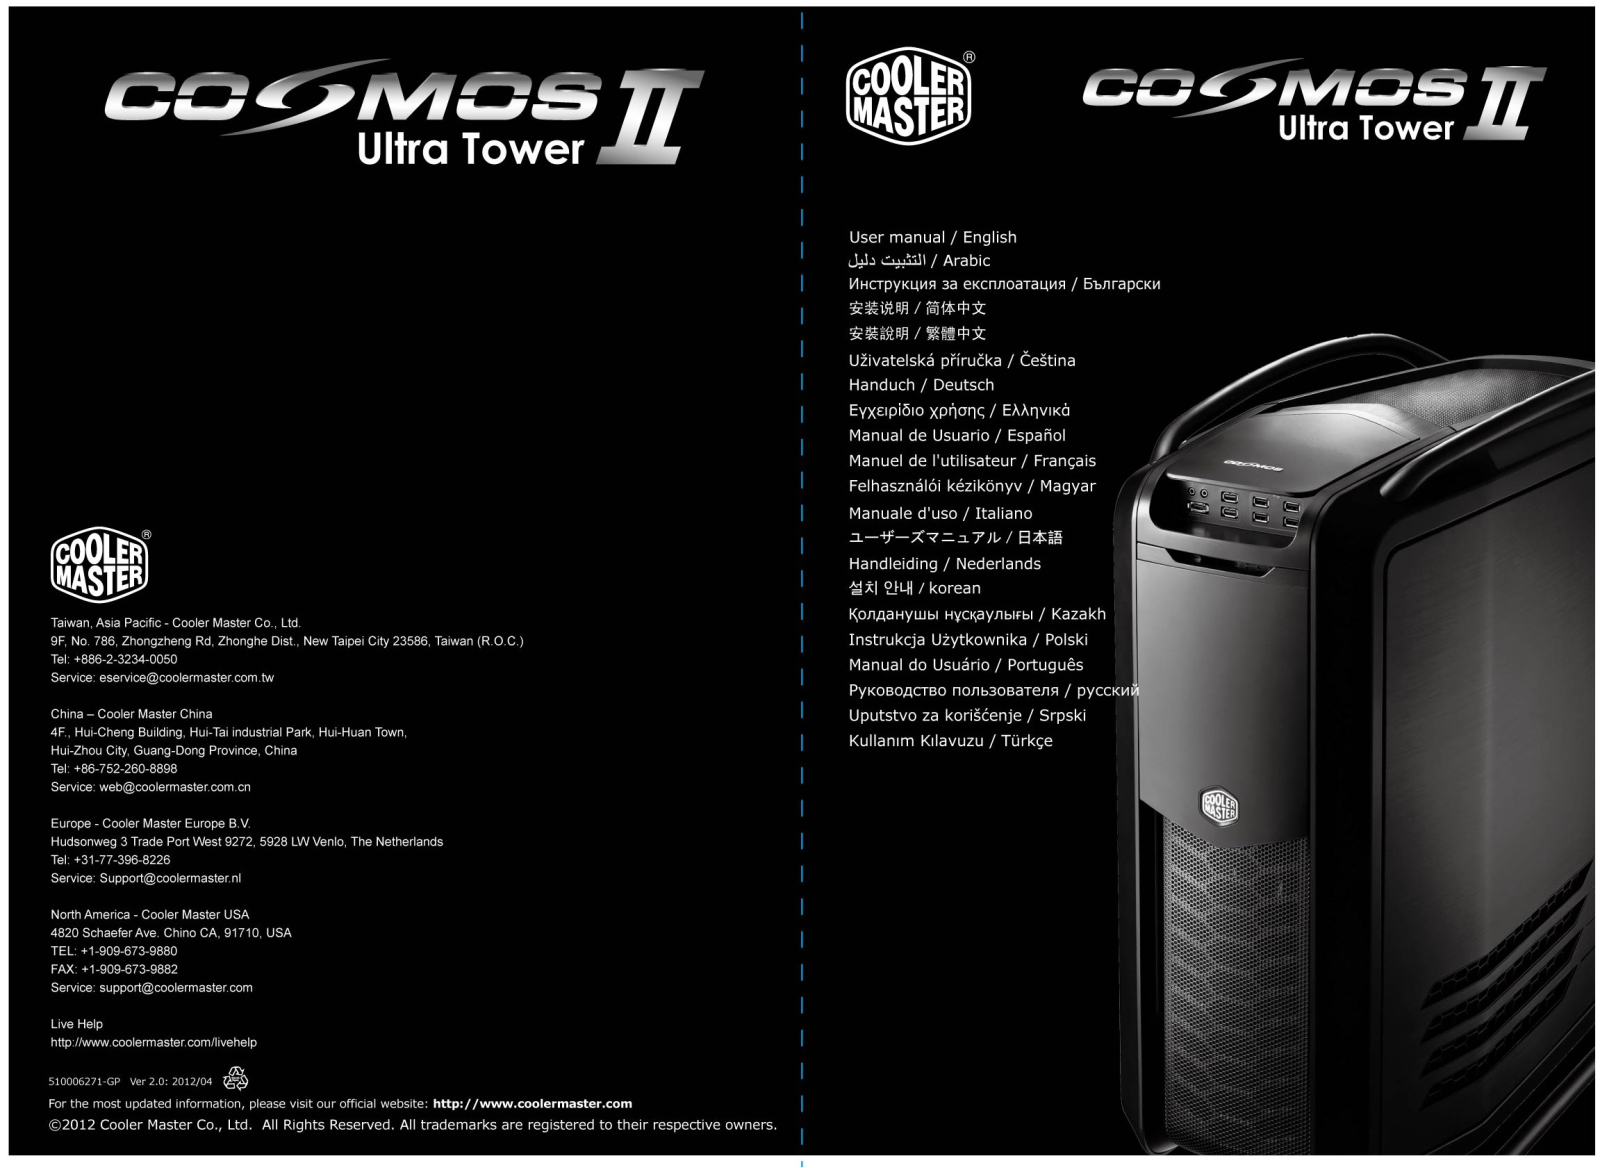 COOLER MASTER Cosmos II User Manual